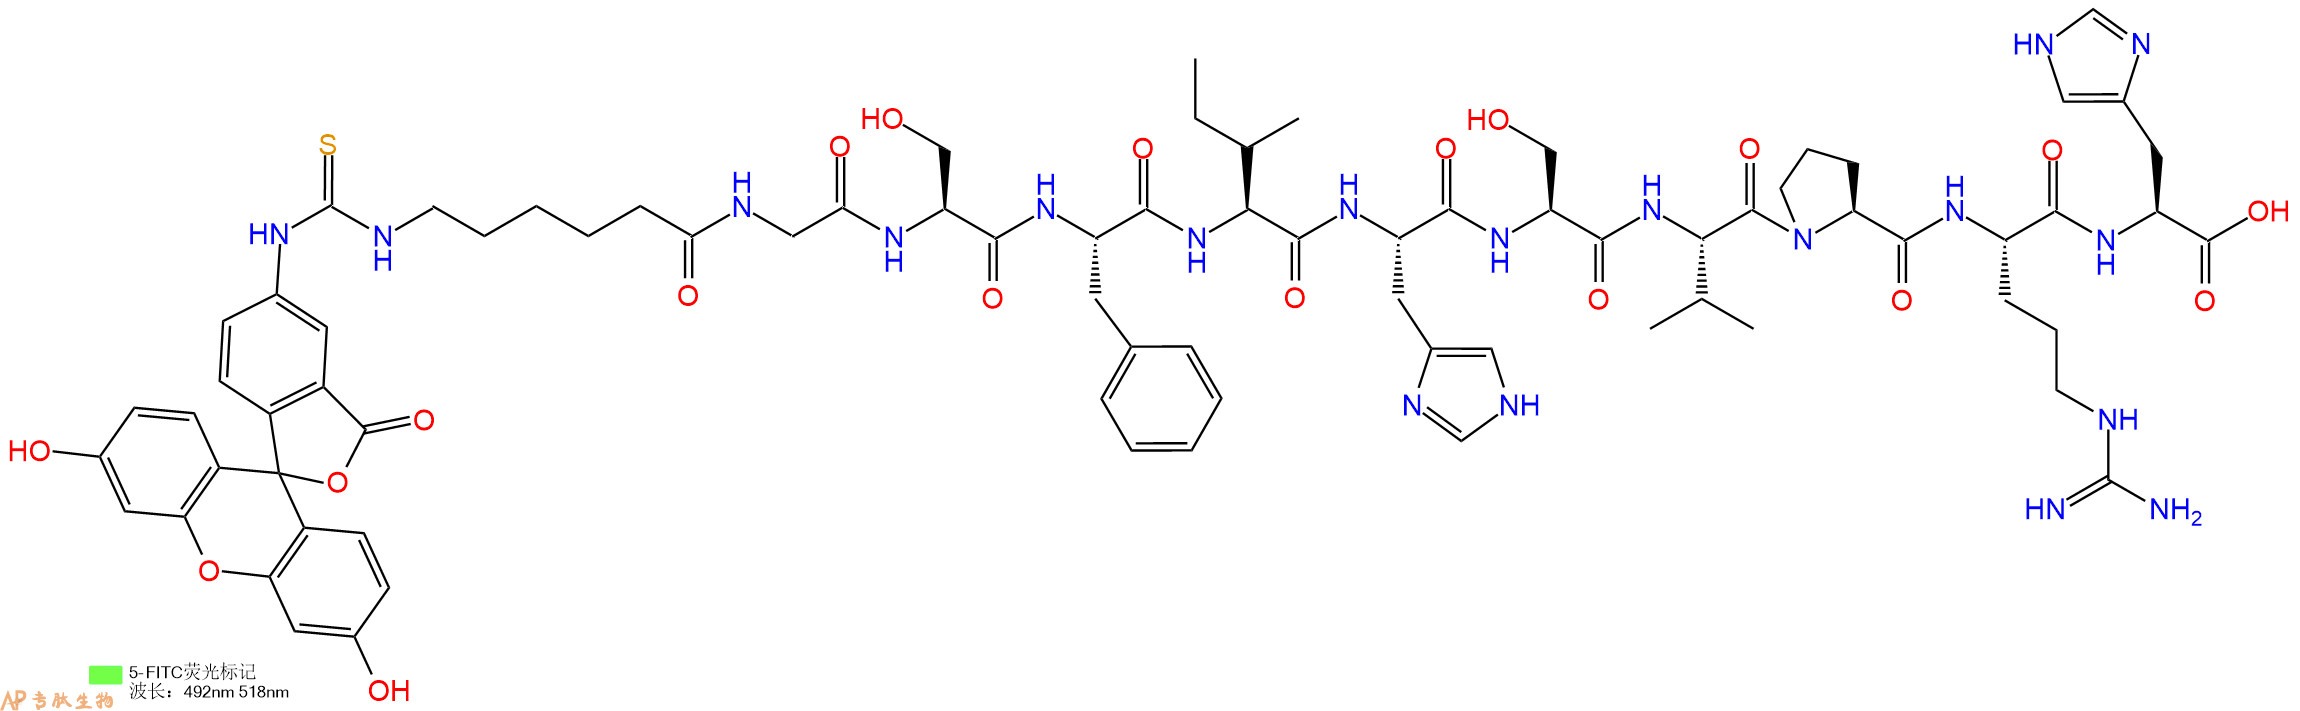 专肽生物产品5FITC-Ahx-Gly-Ser-Phe-Ile-His-Ser-Val-Pro-Arg-His-COOH